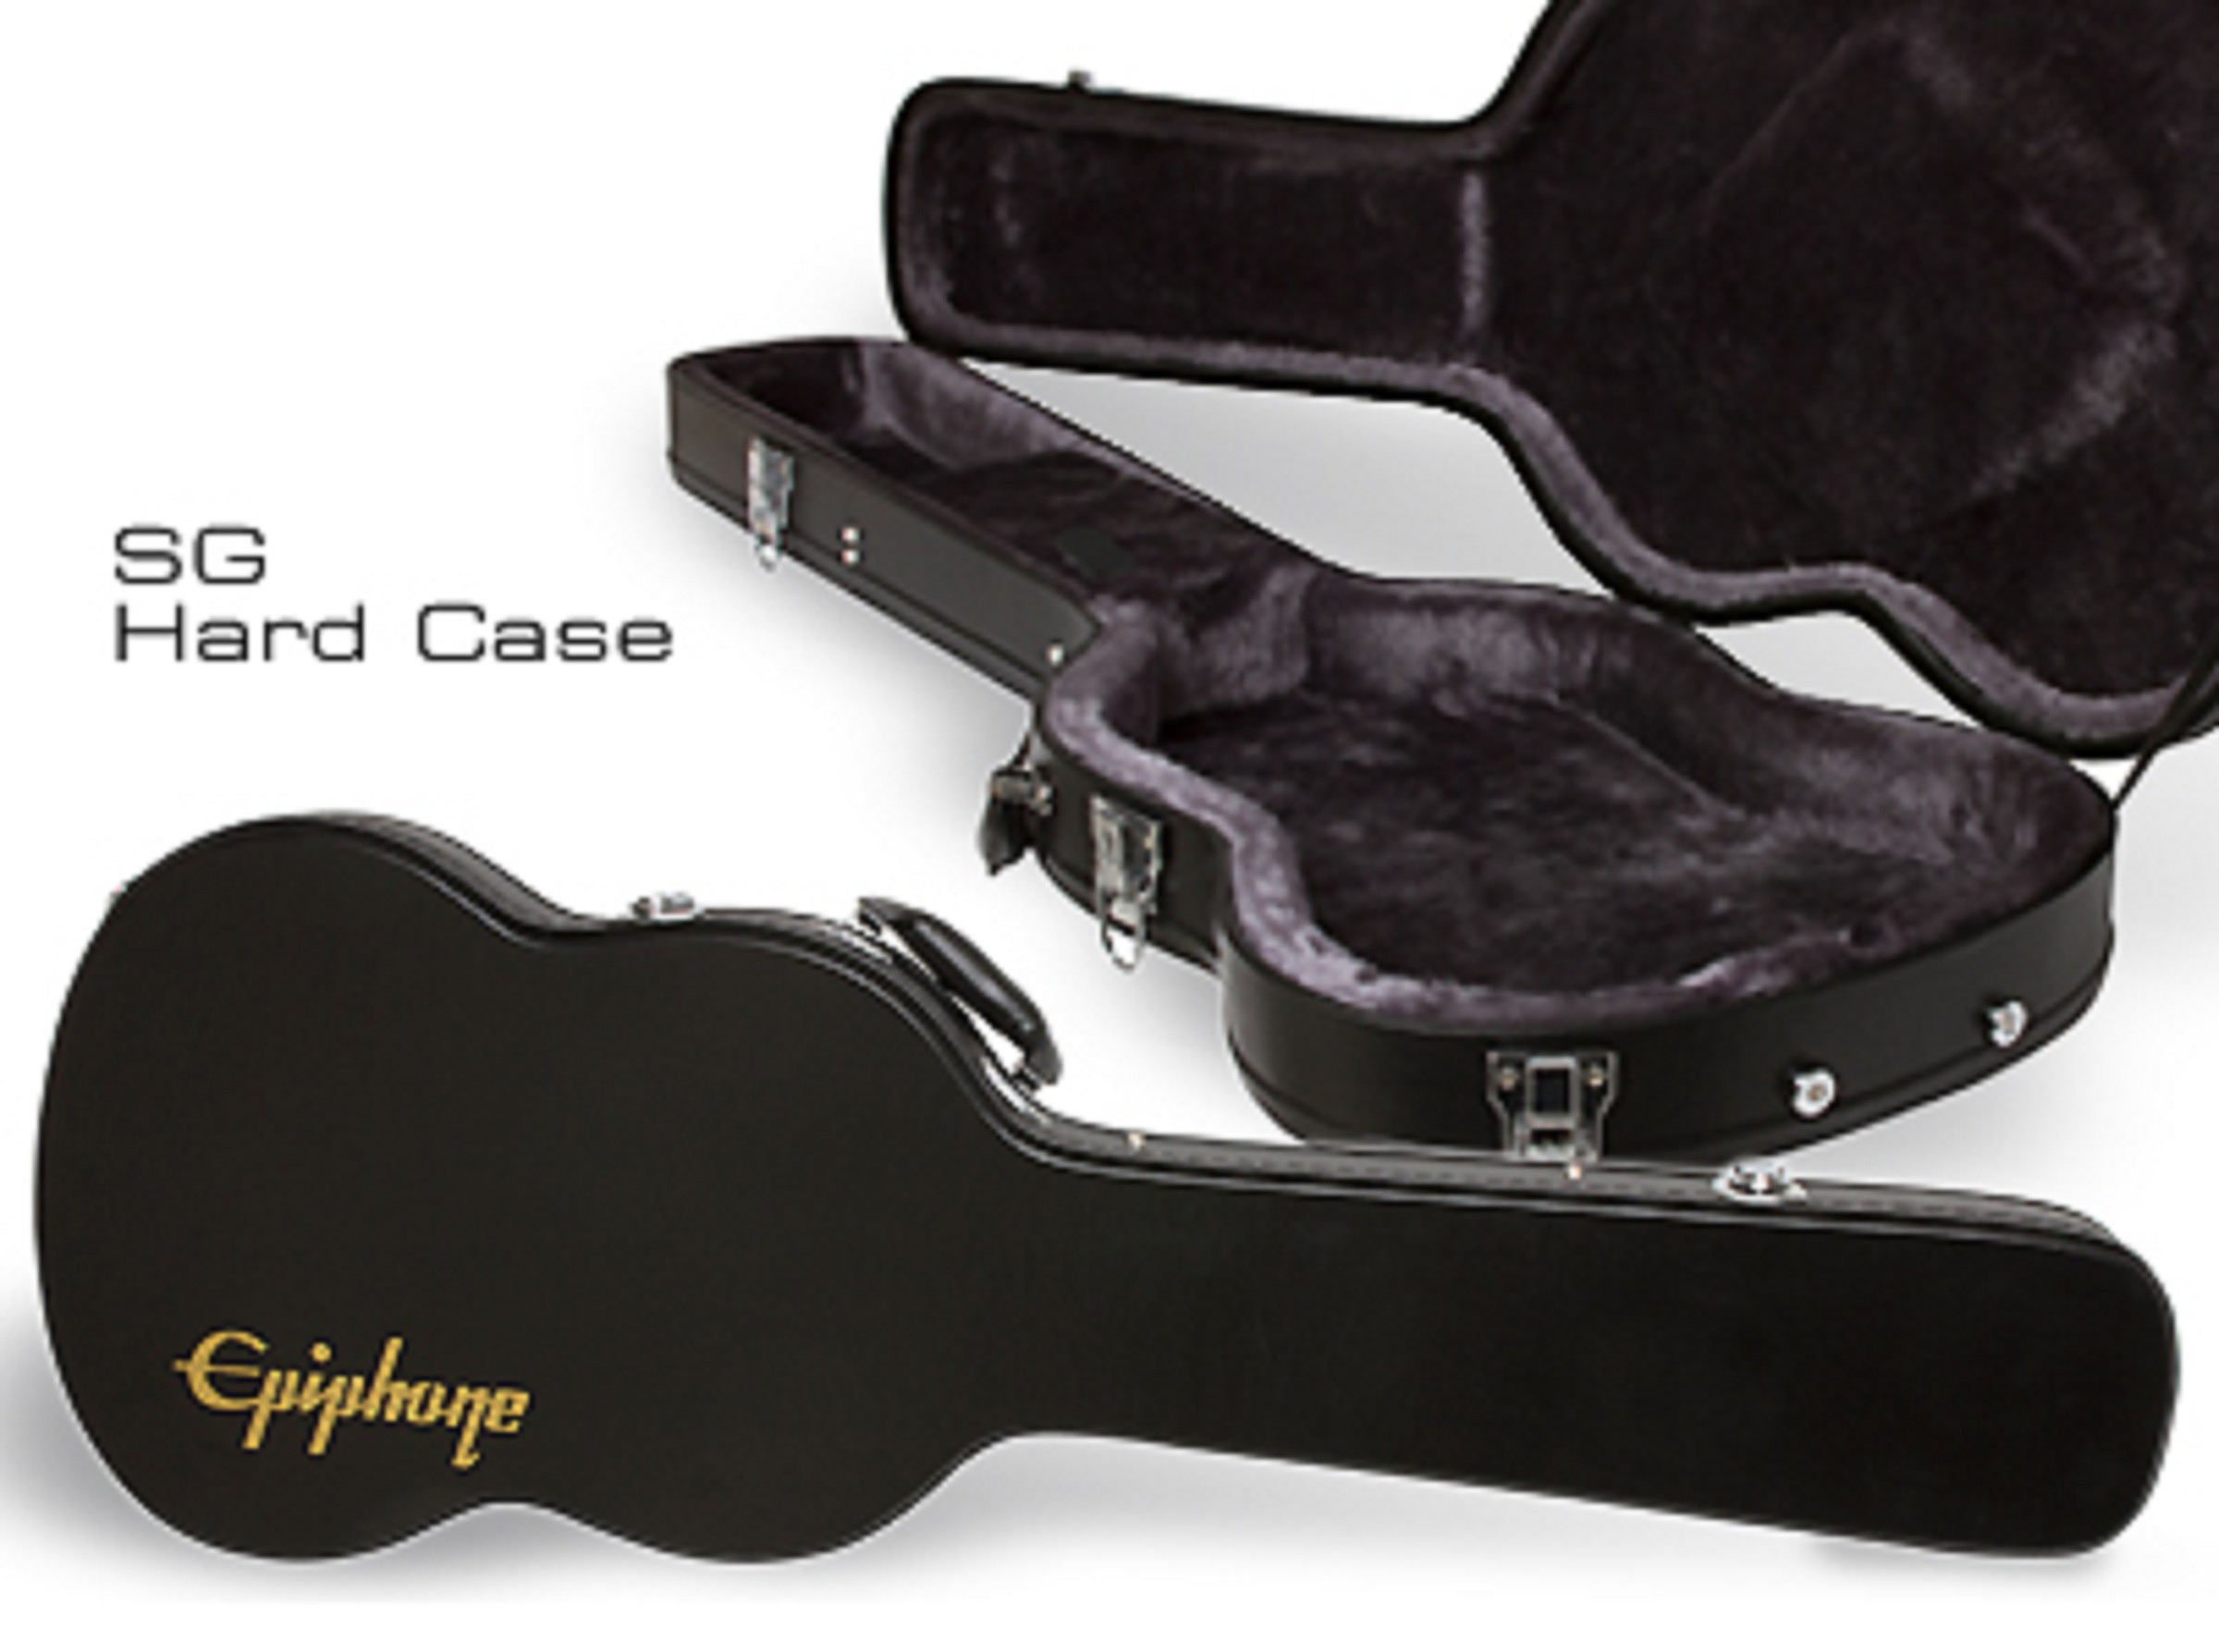 Epiphone Case SG